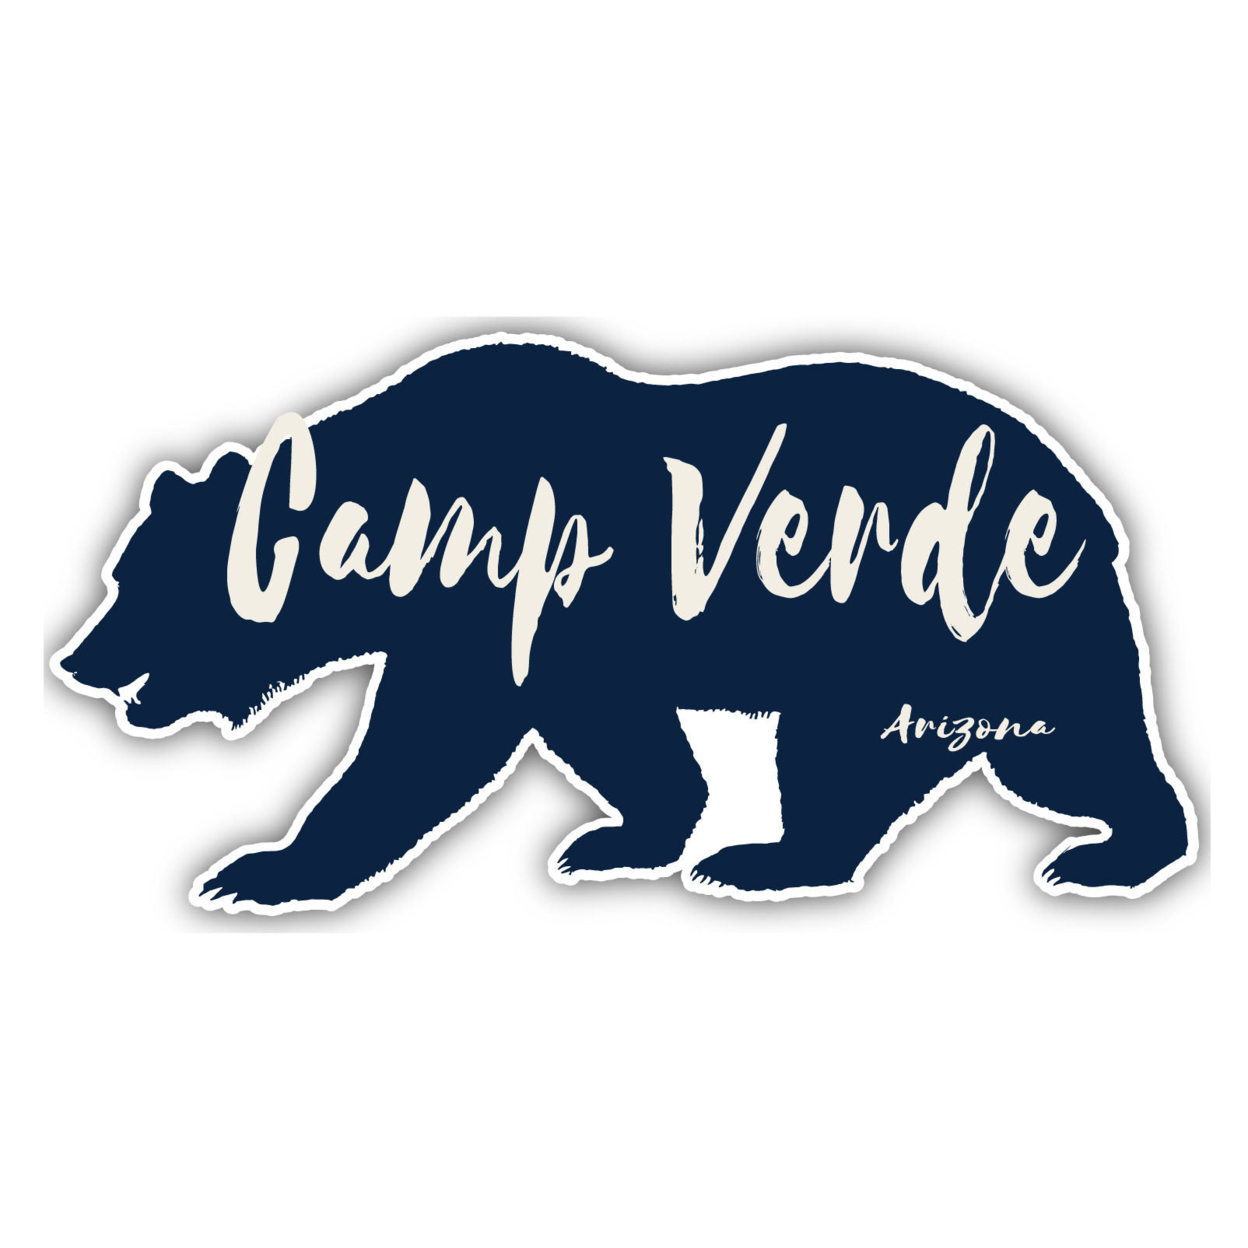 Camp Verde Arizona Souvenir Decorative Stickers (Choose Theme And Size) - Single Unit, 12-Inch, Bear